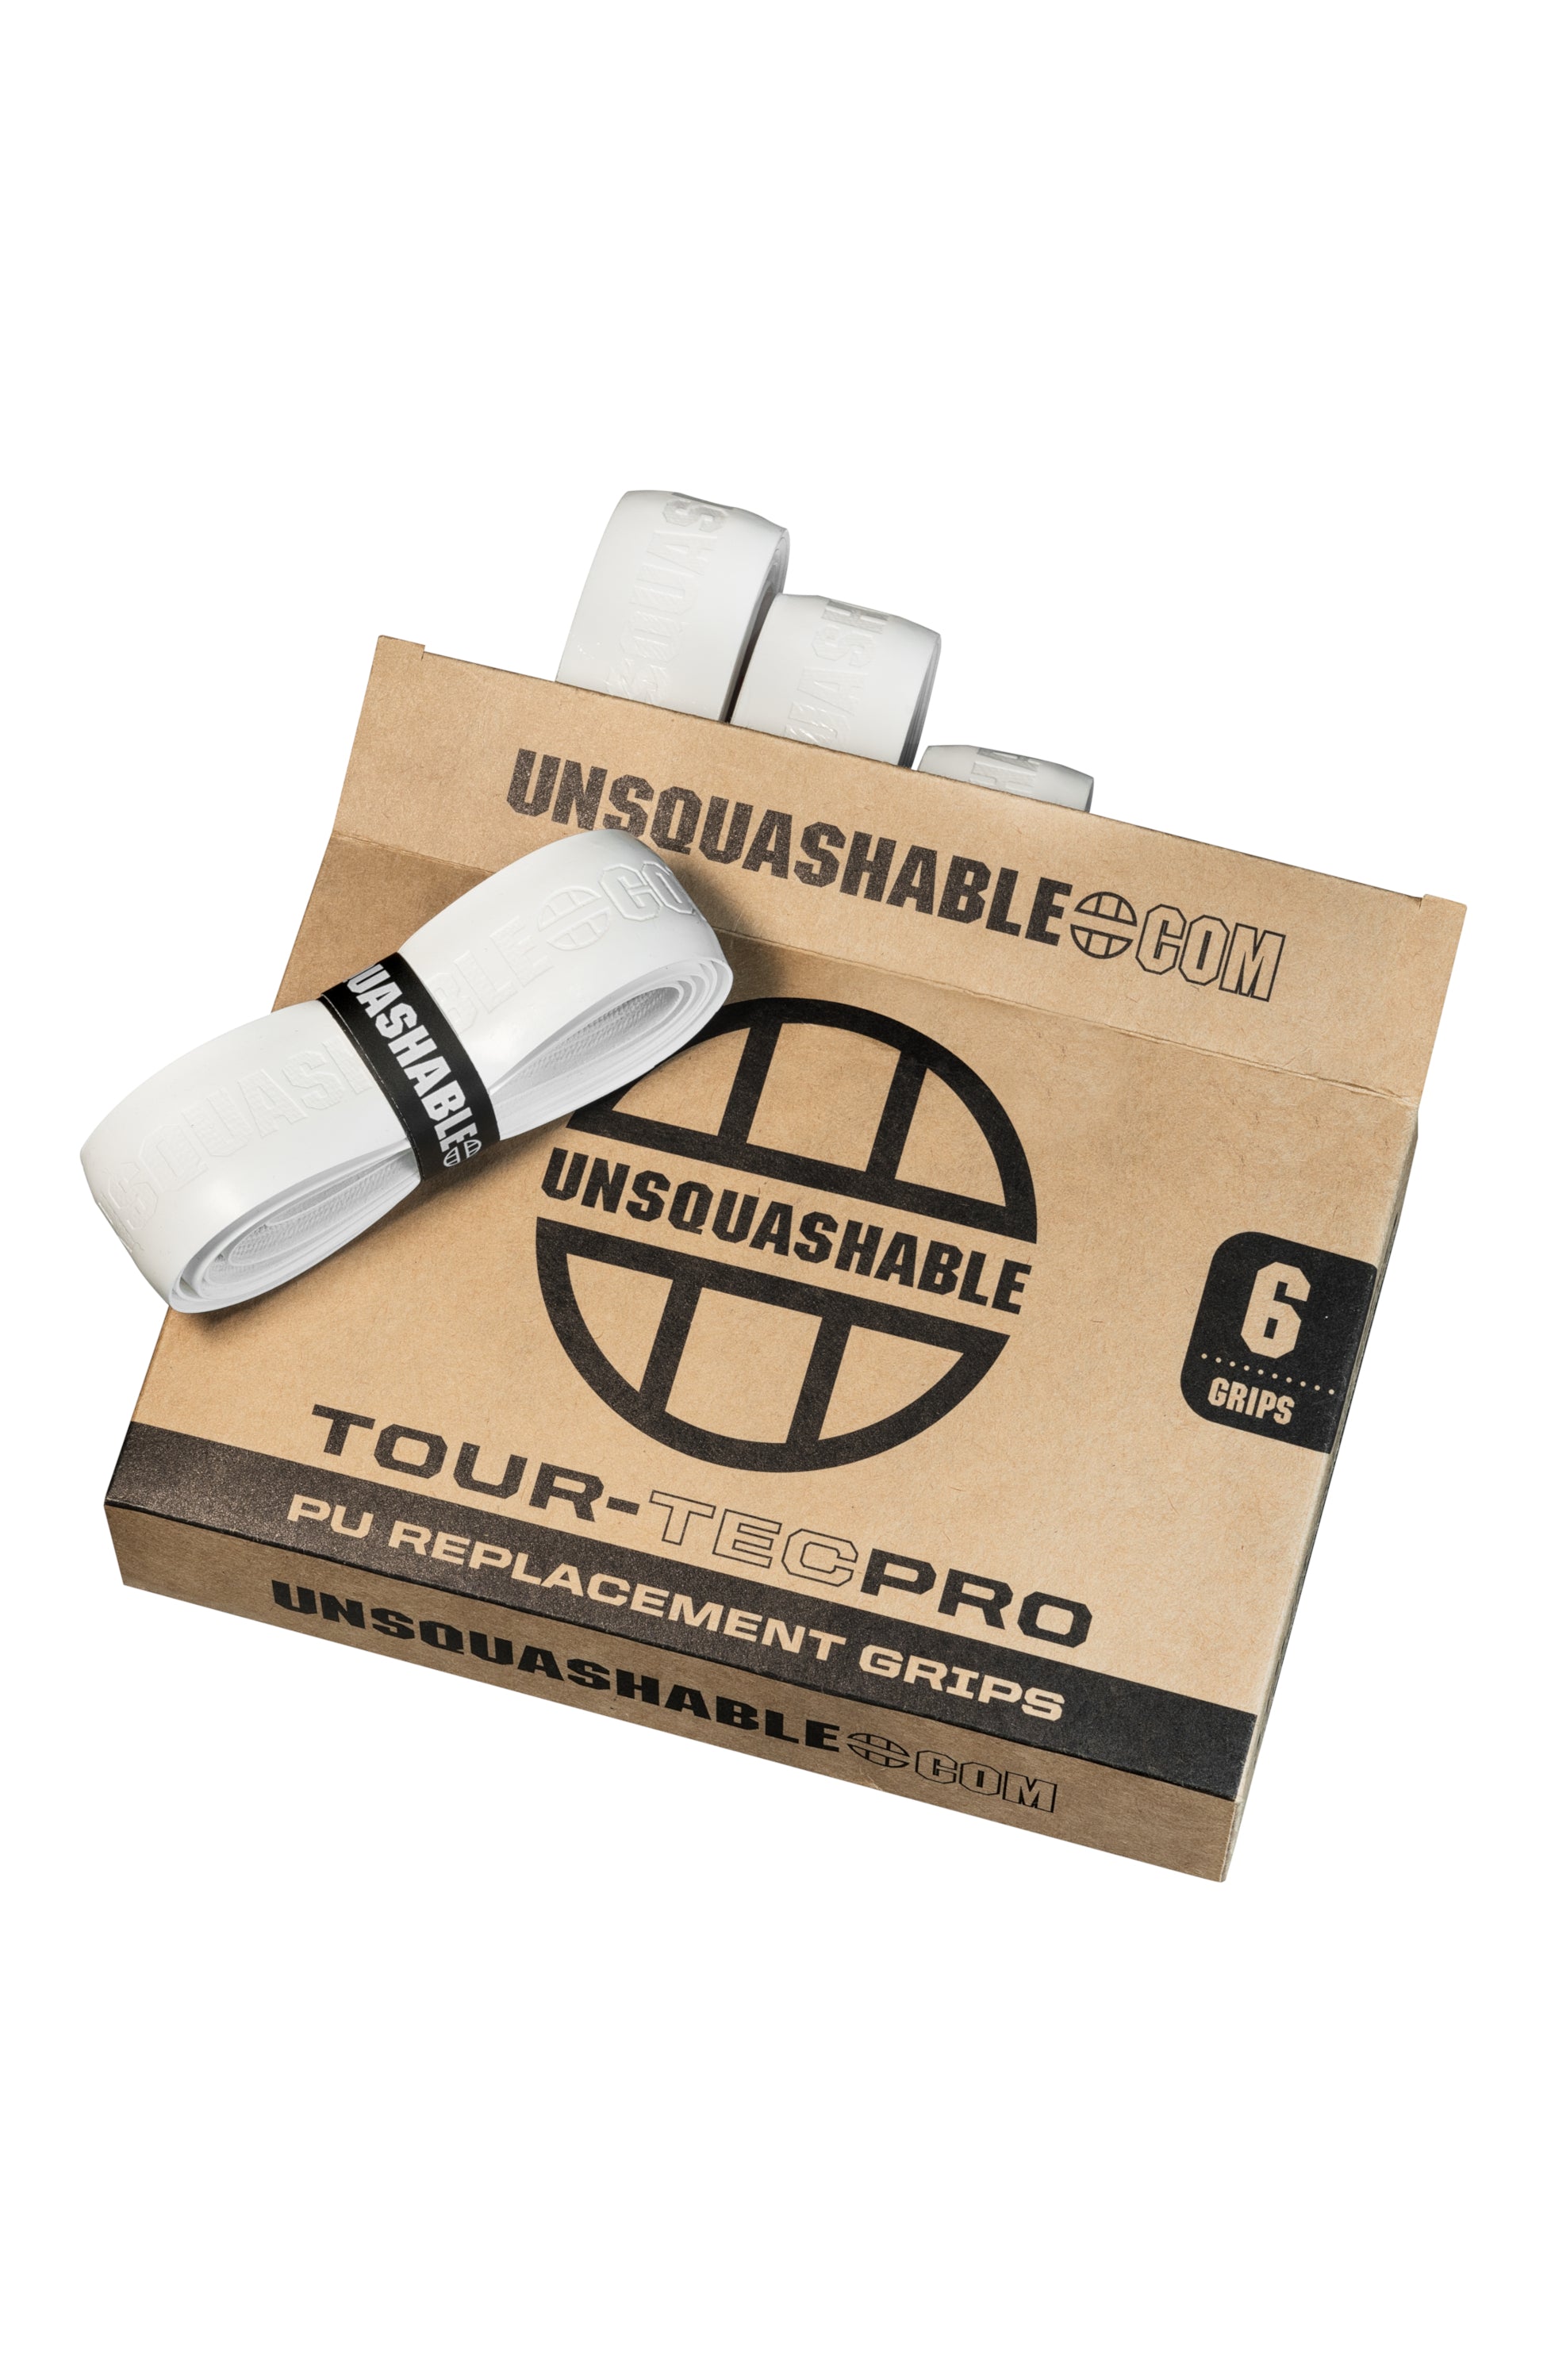 UNSQUASHABLE Tour-Tec Pro PU Squash Grips (6-Pak)